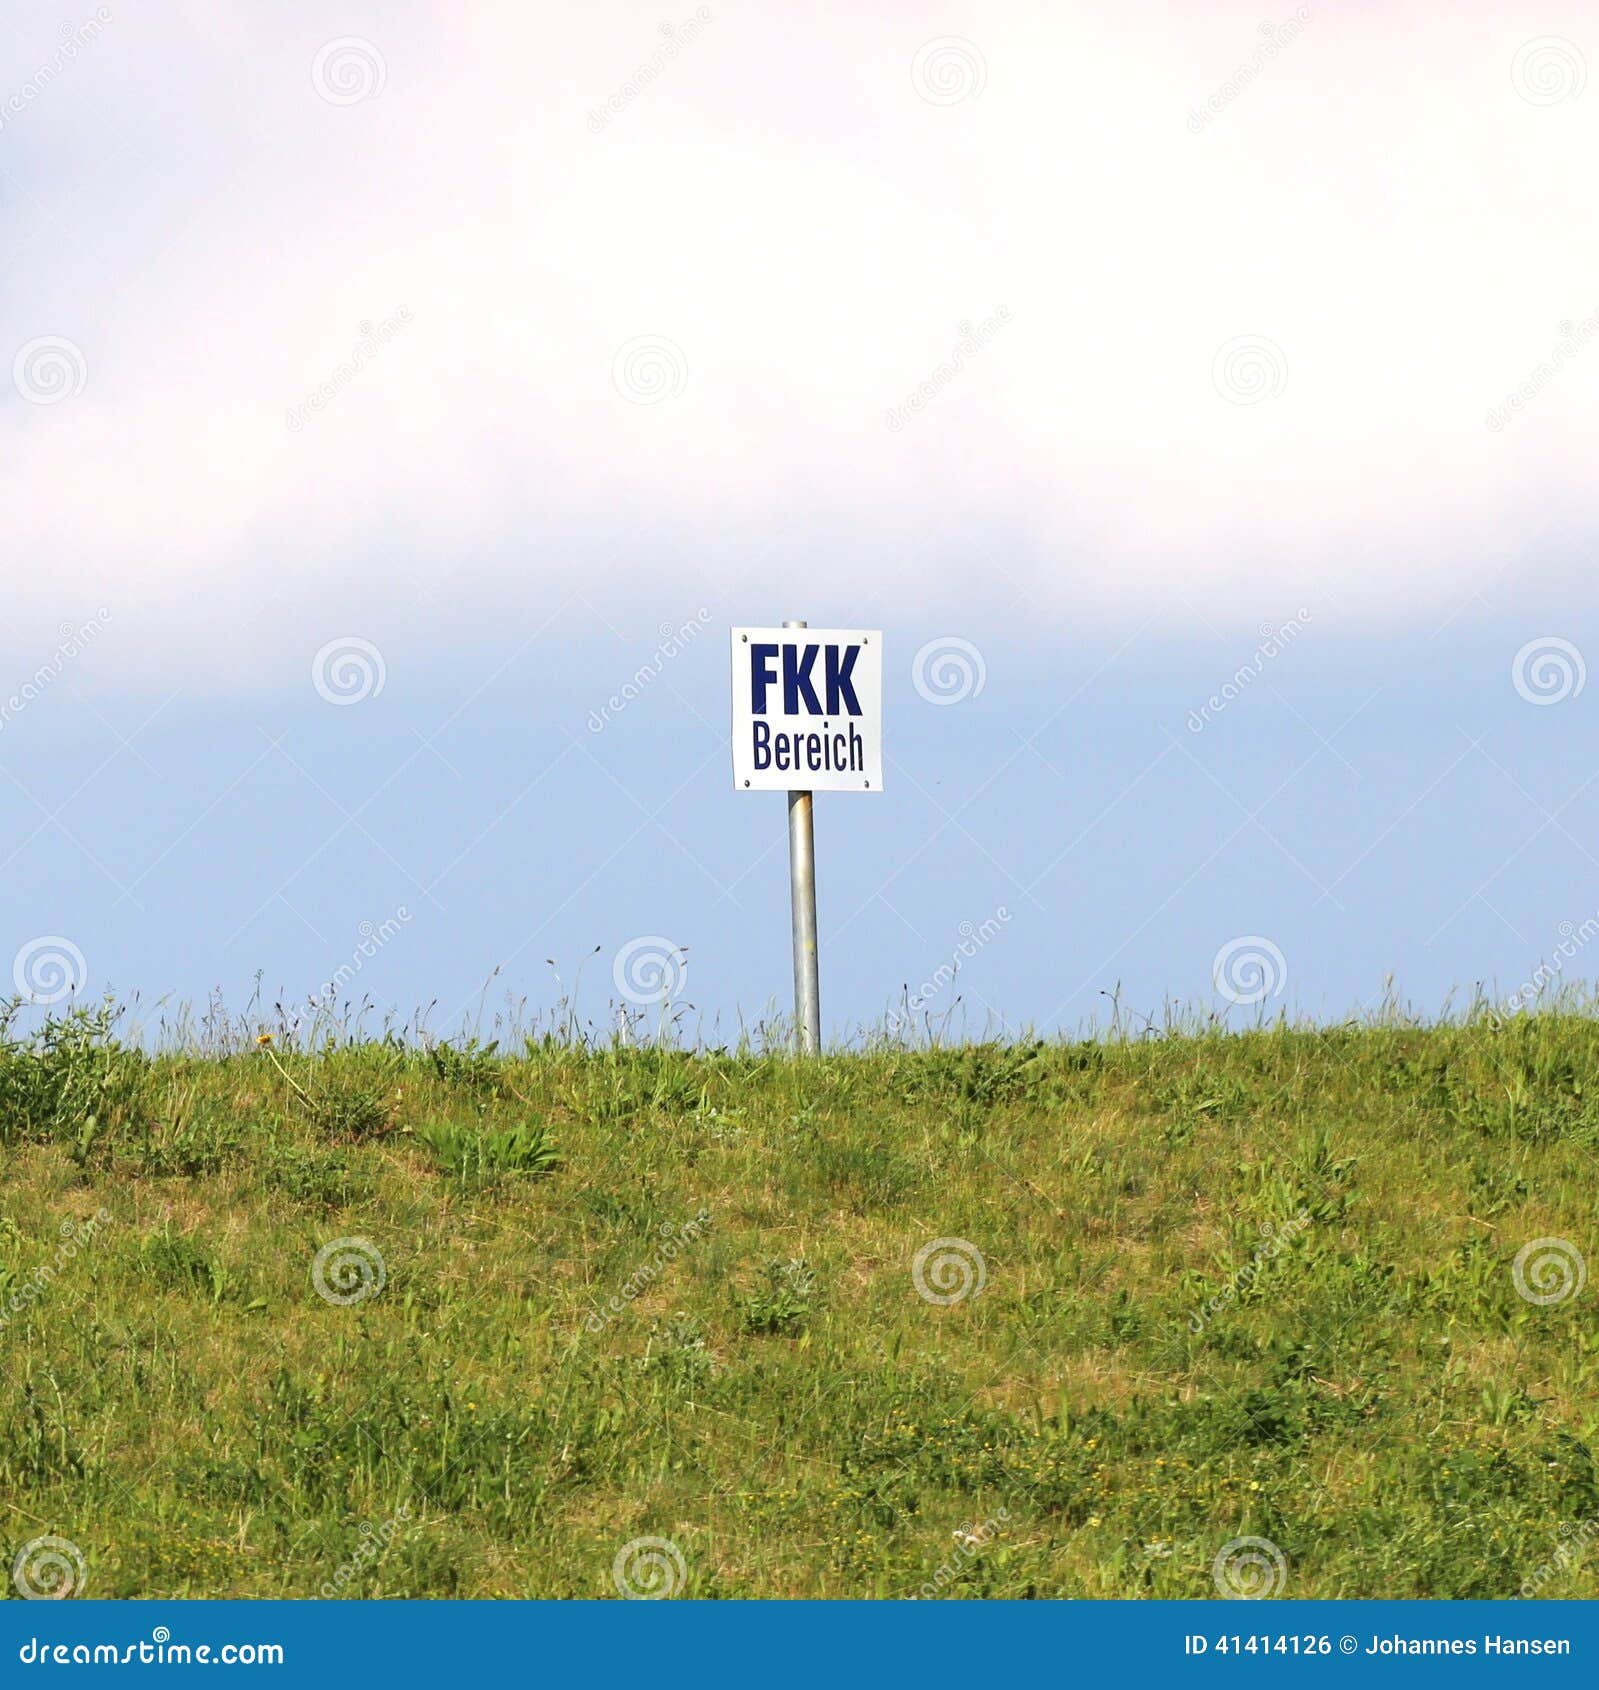 Fkk Sign Stock Photo - Download Image Now - iStock